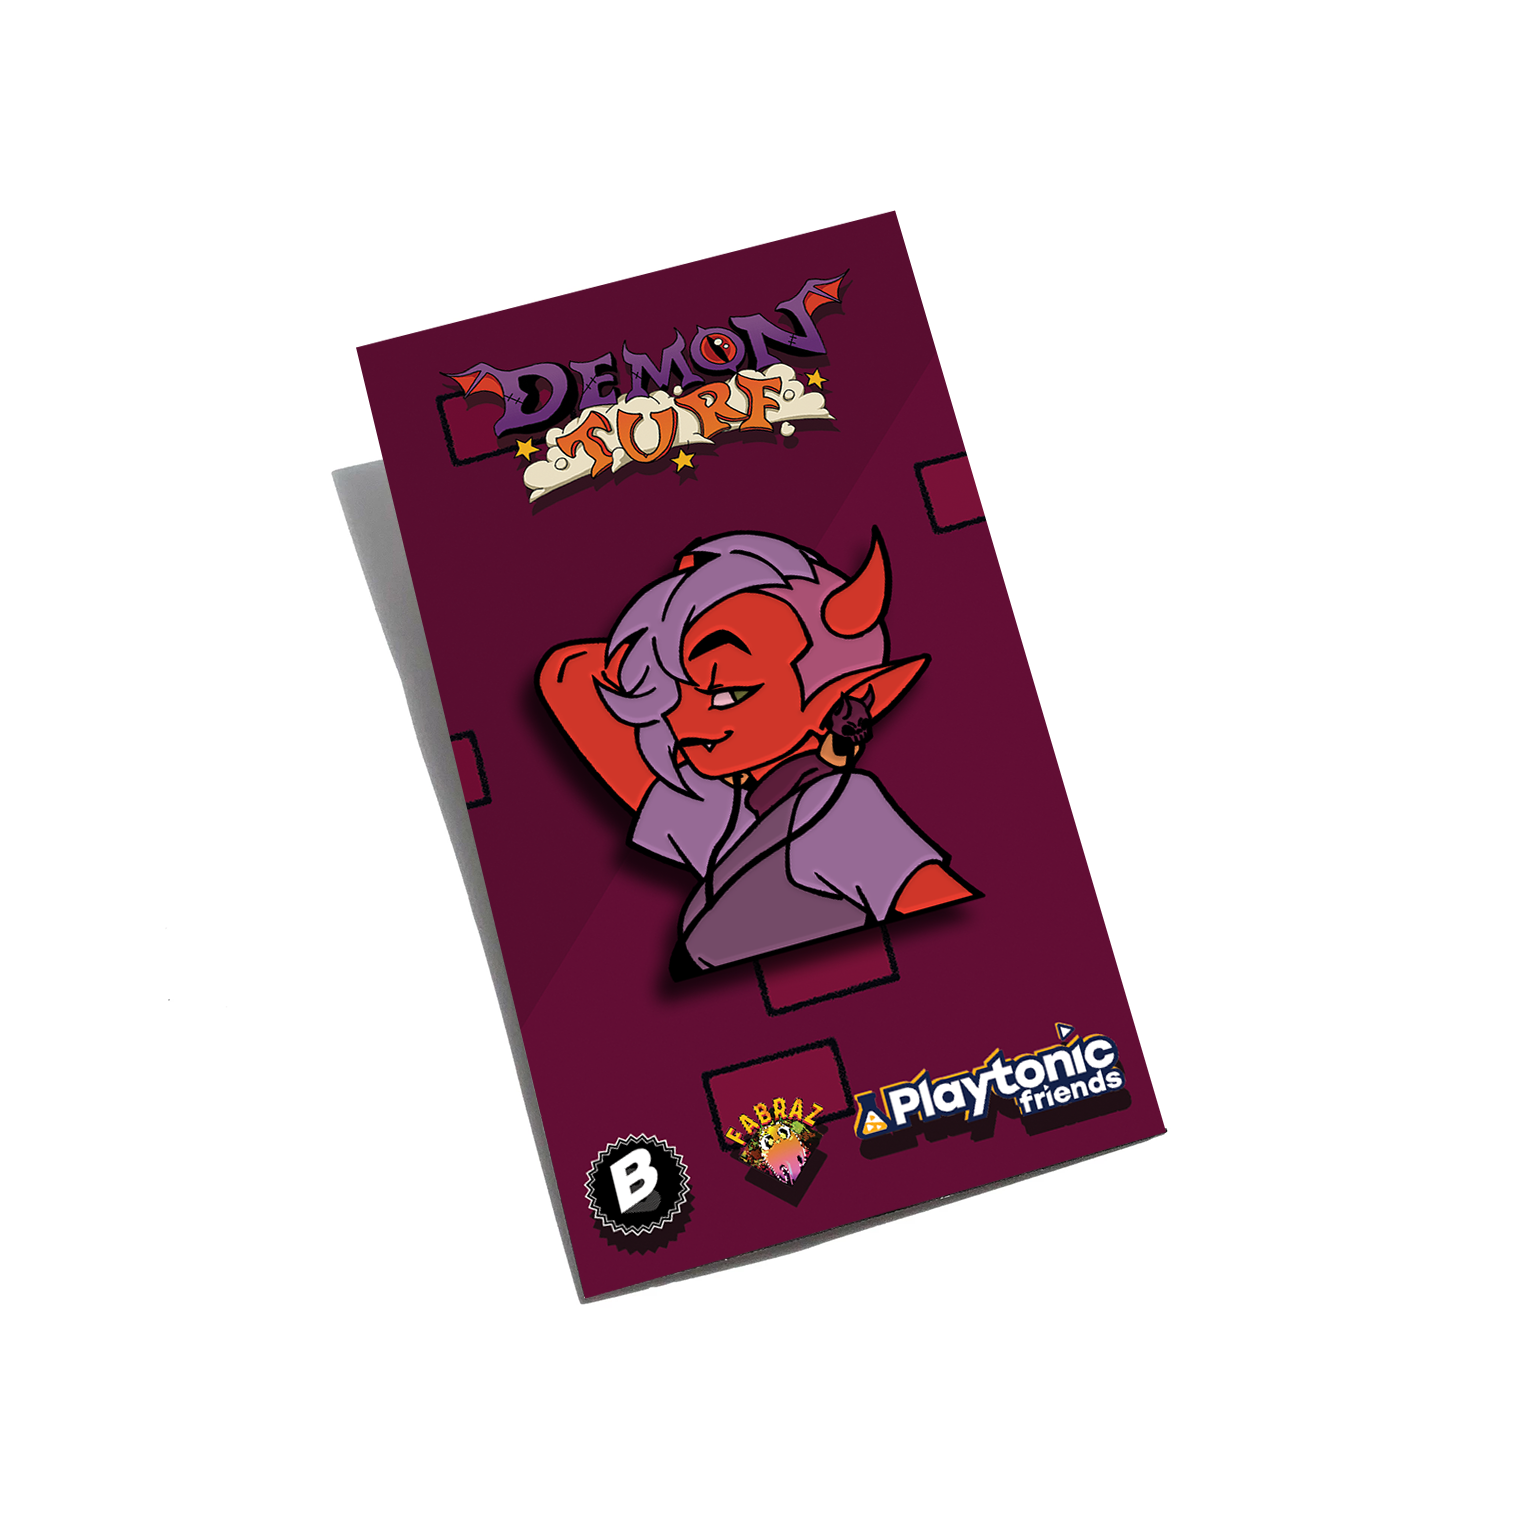 Demon Turf pin cover design